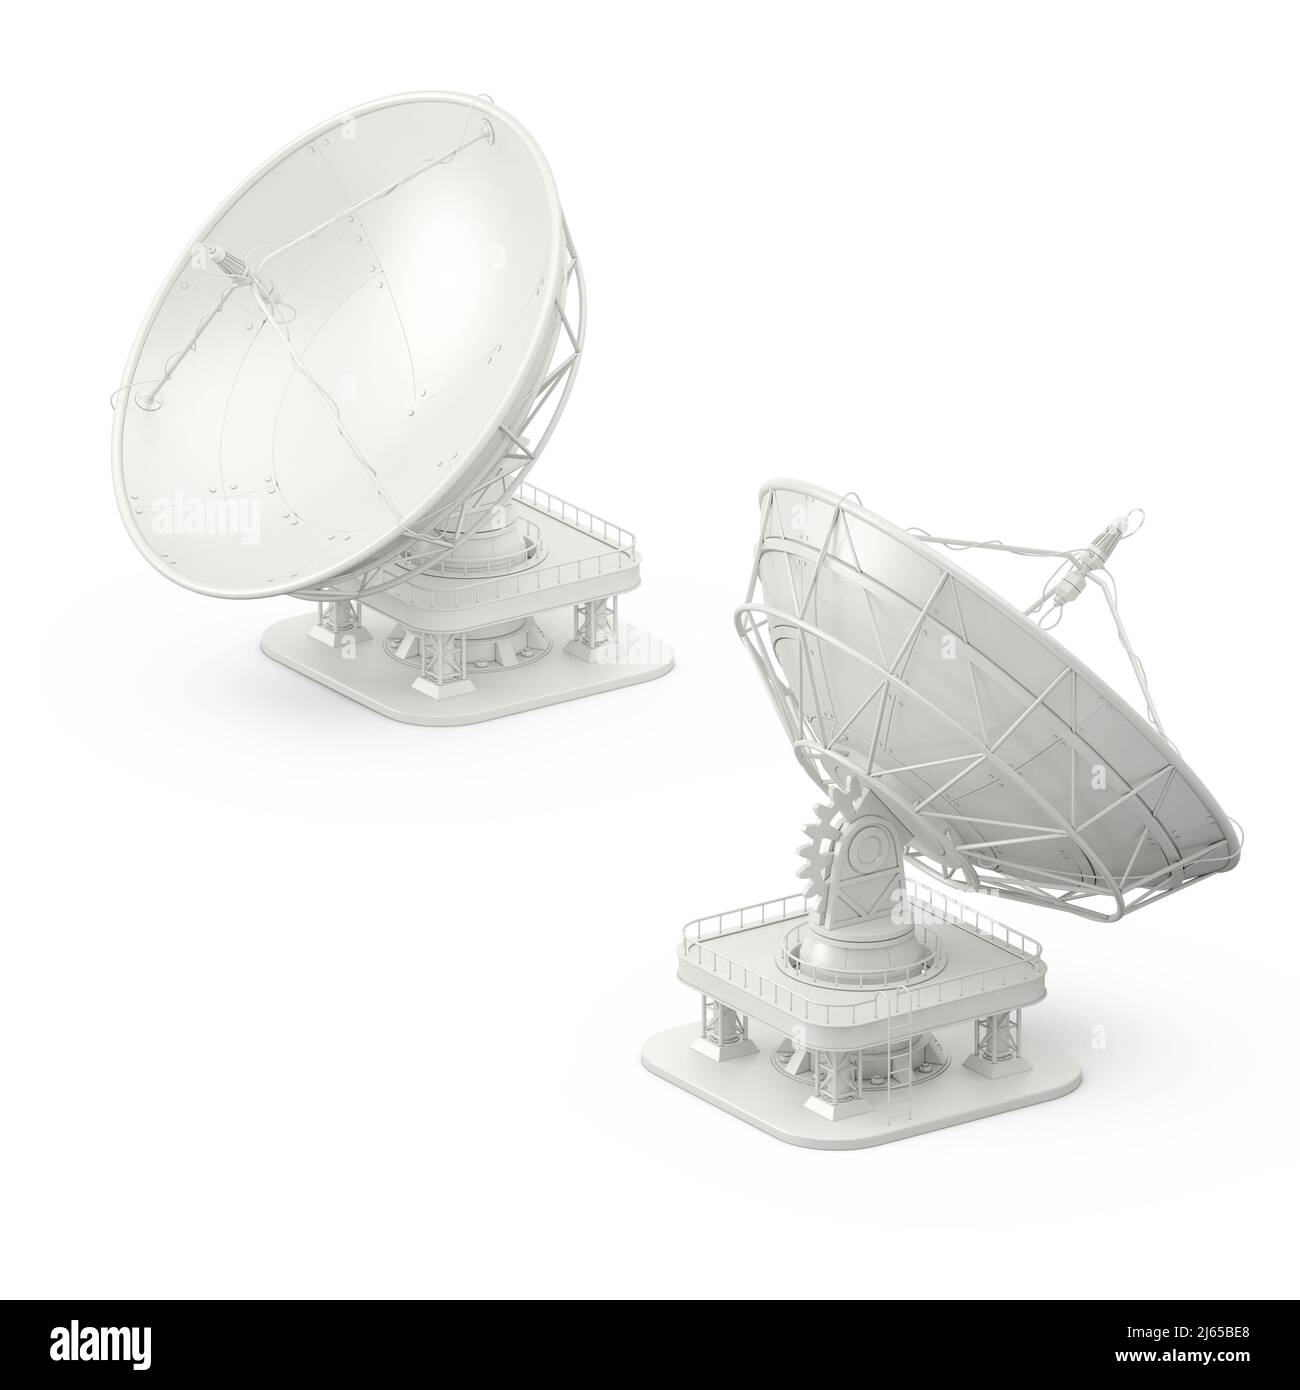 Row Of Big Satellite Dish Antenna Radars on a white background. 3d Rendering Stock Photo